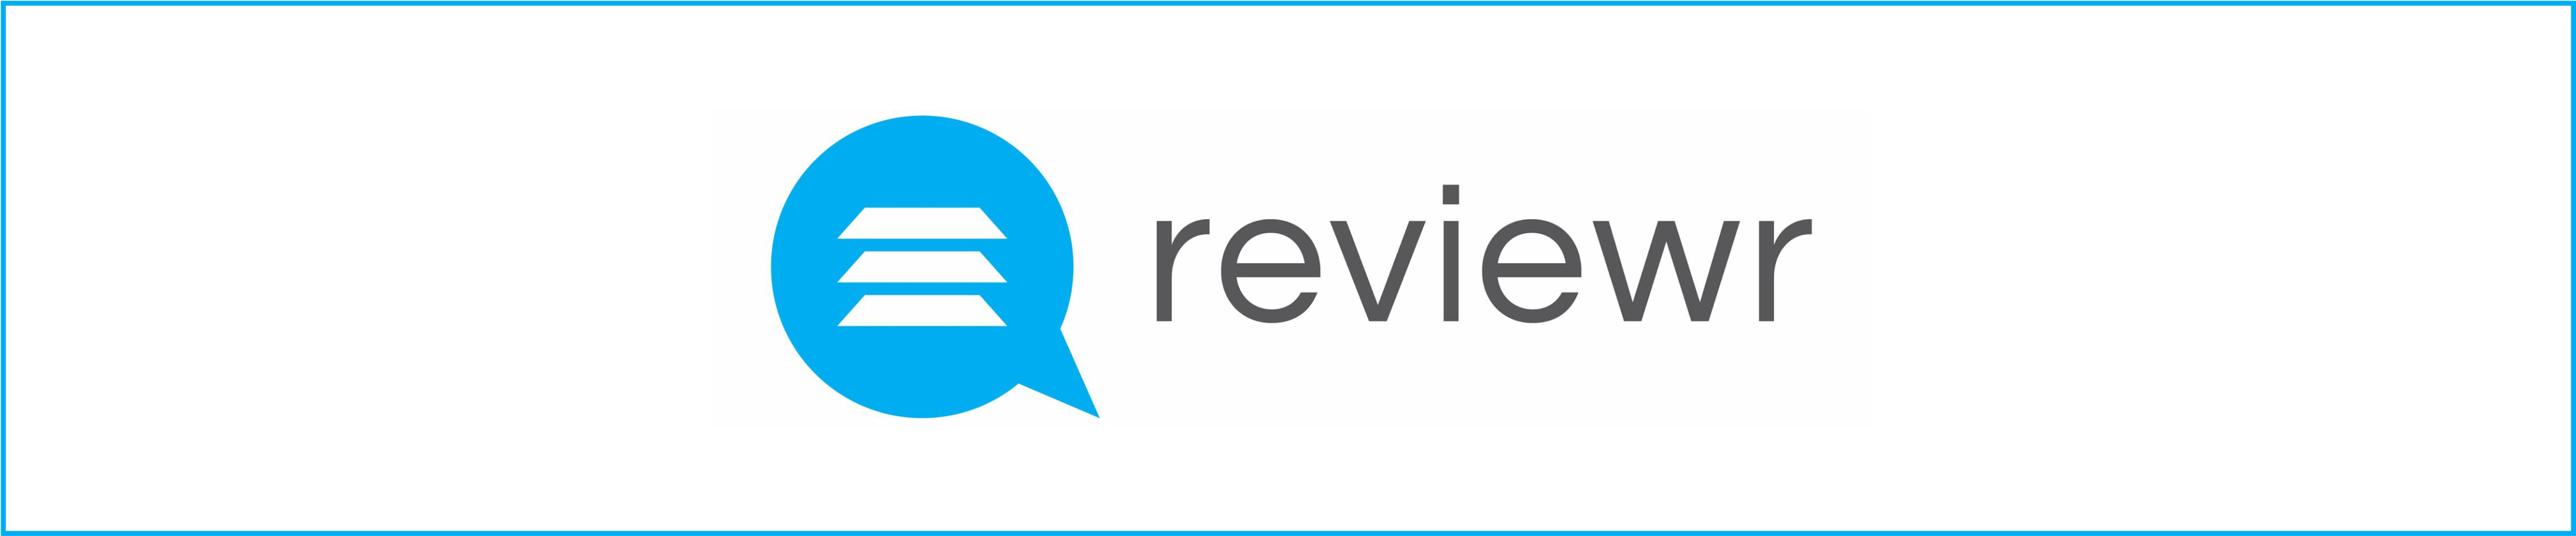 Reviewr-header